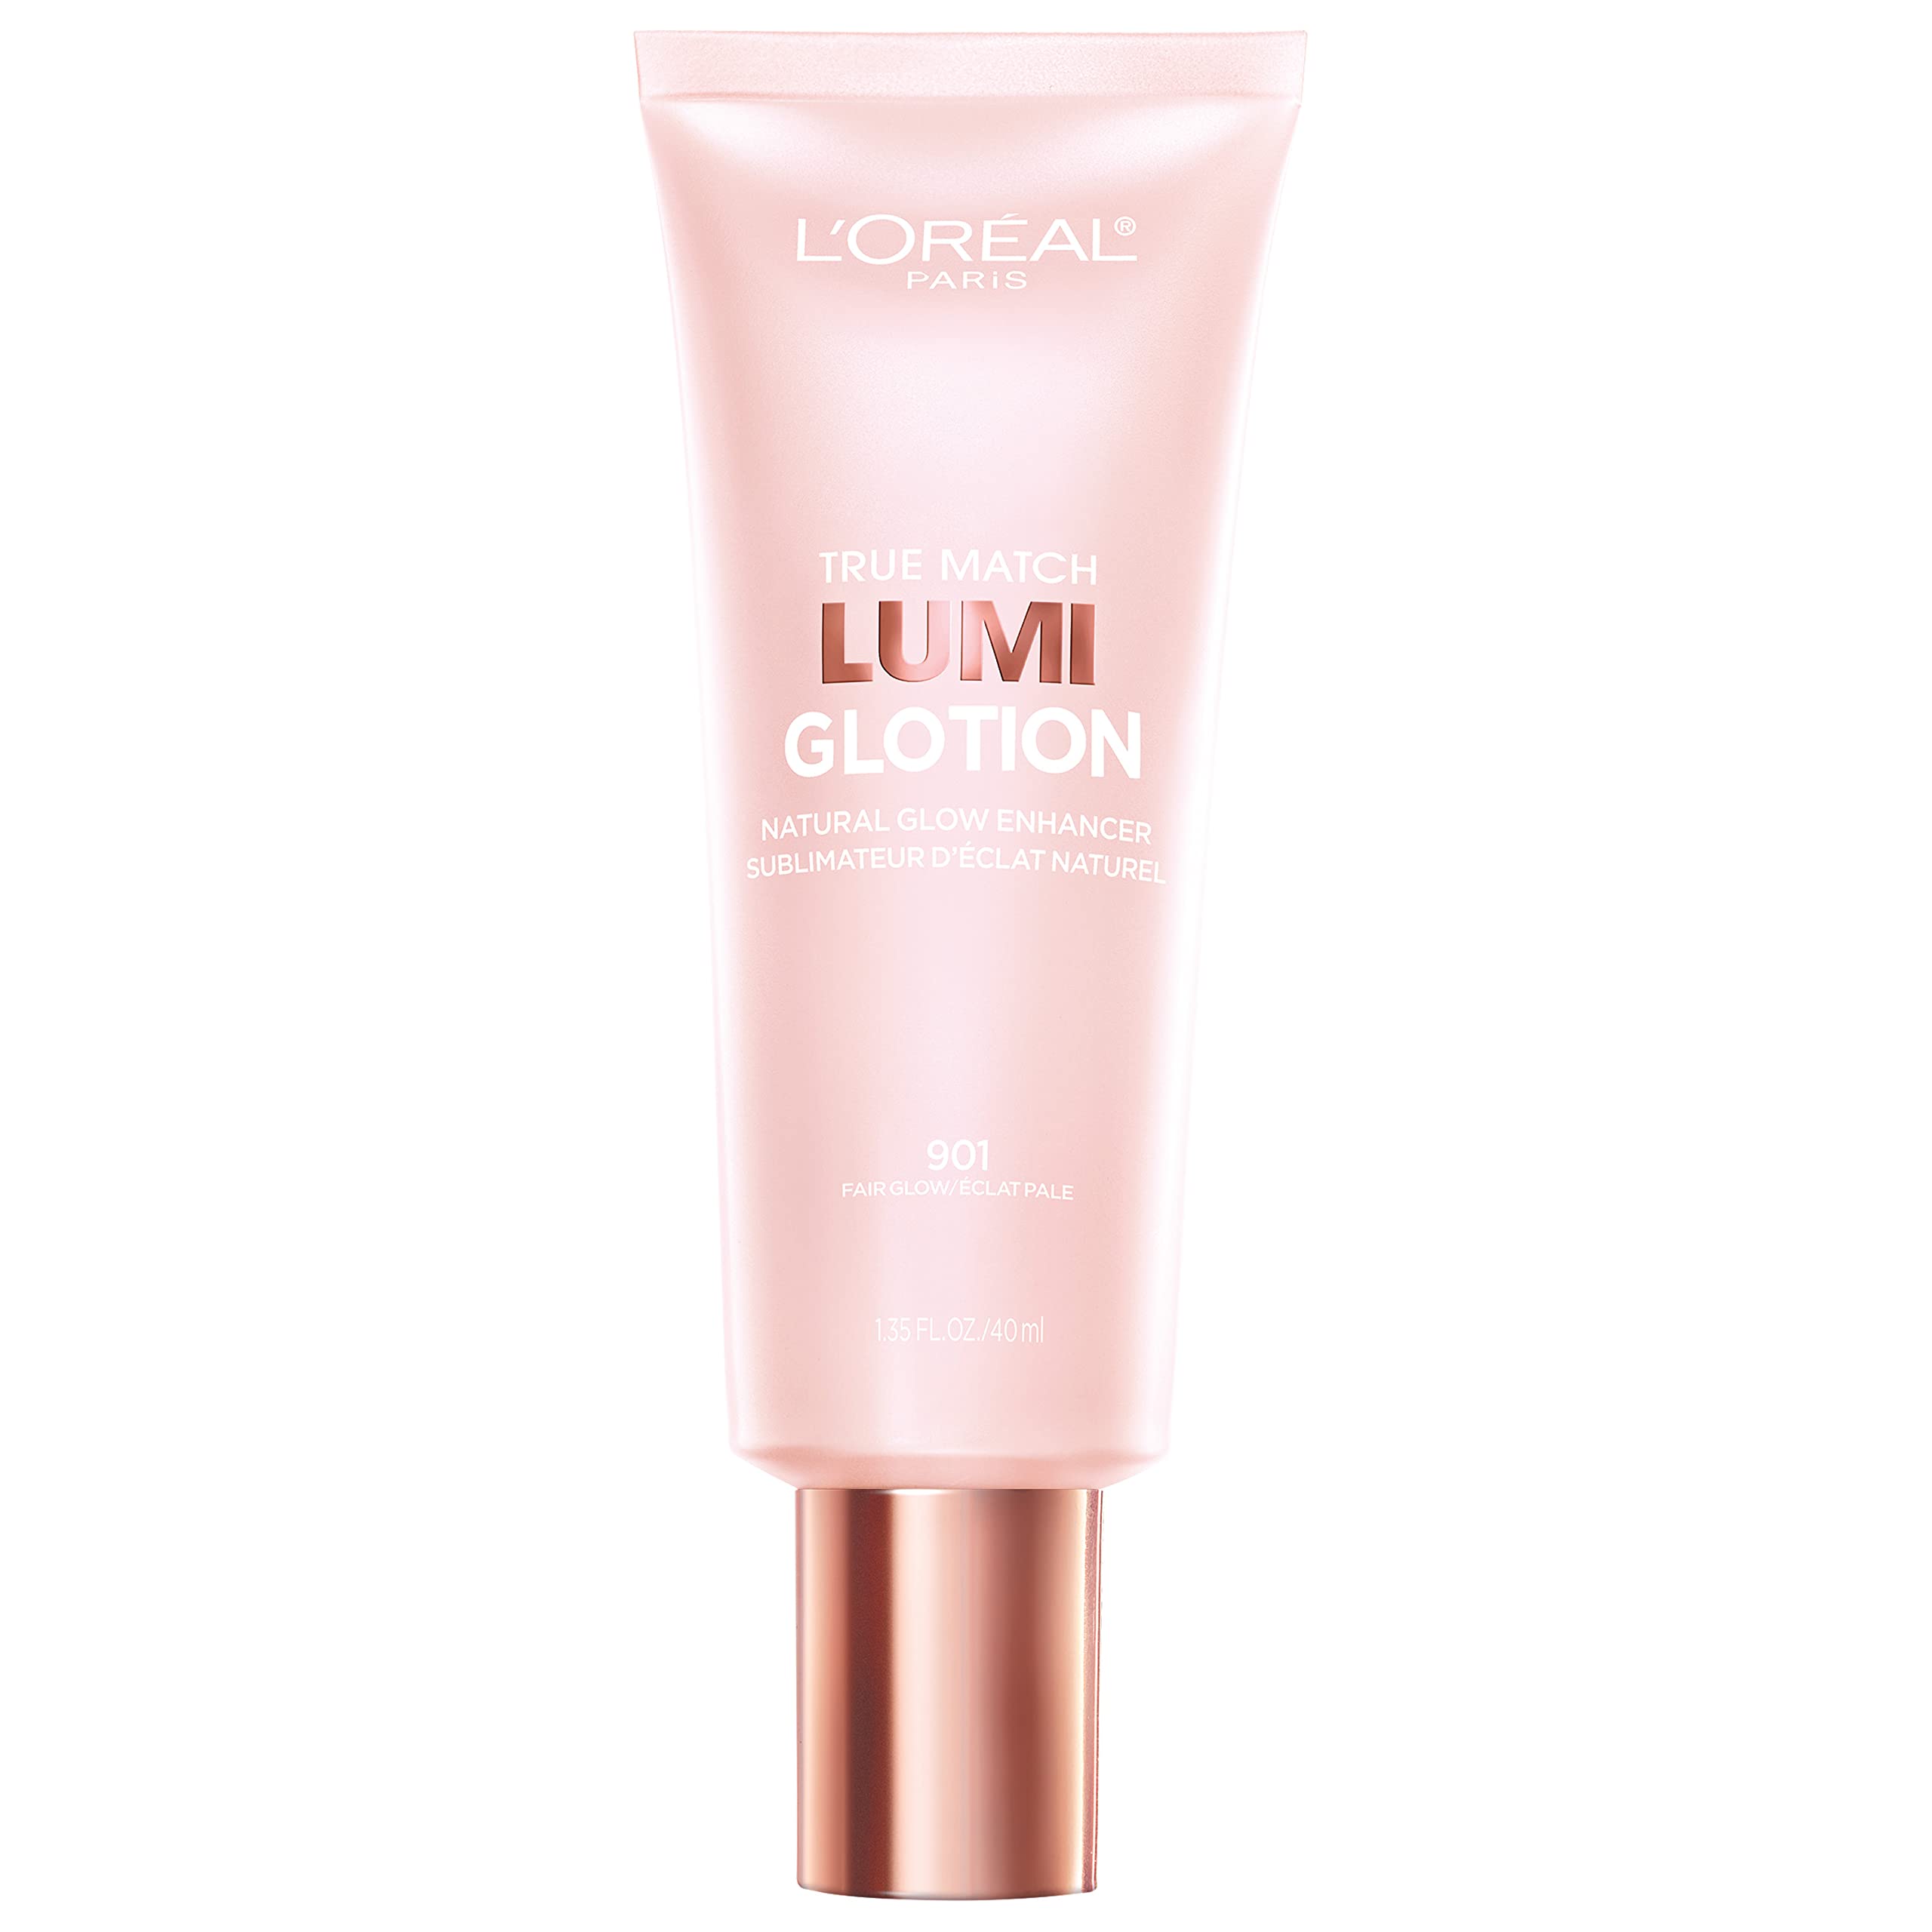 L’Oréal Paris Makeup True Match Lumi Glotion, Natural Glow Enhancer, Illuminator Highlighter Skin Tint, for an All Day Radiant Glow, Fair, 1.35 Ounces